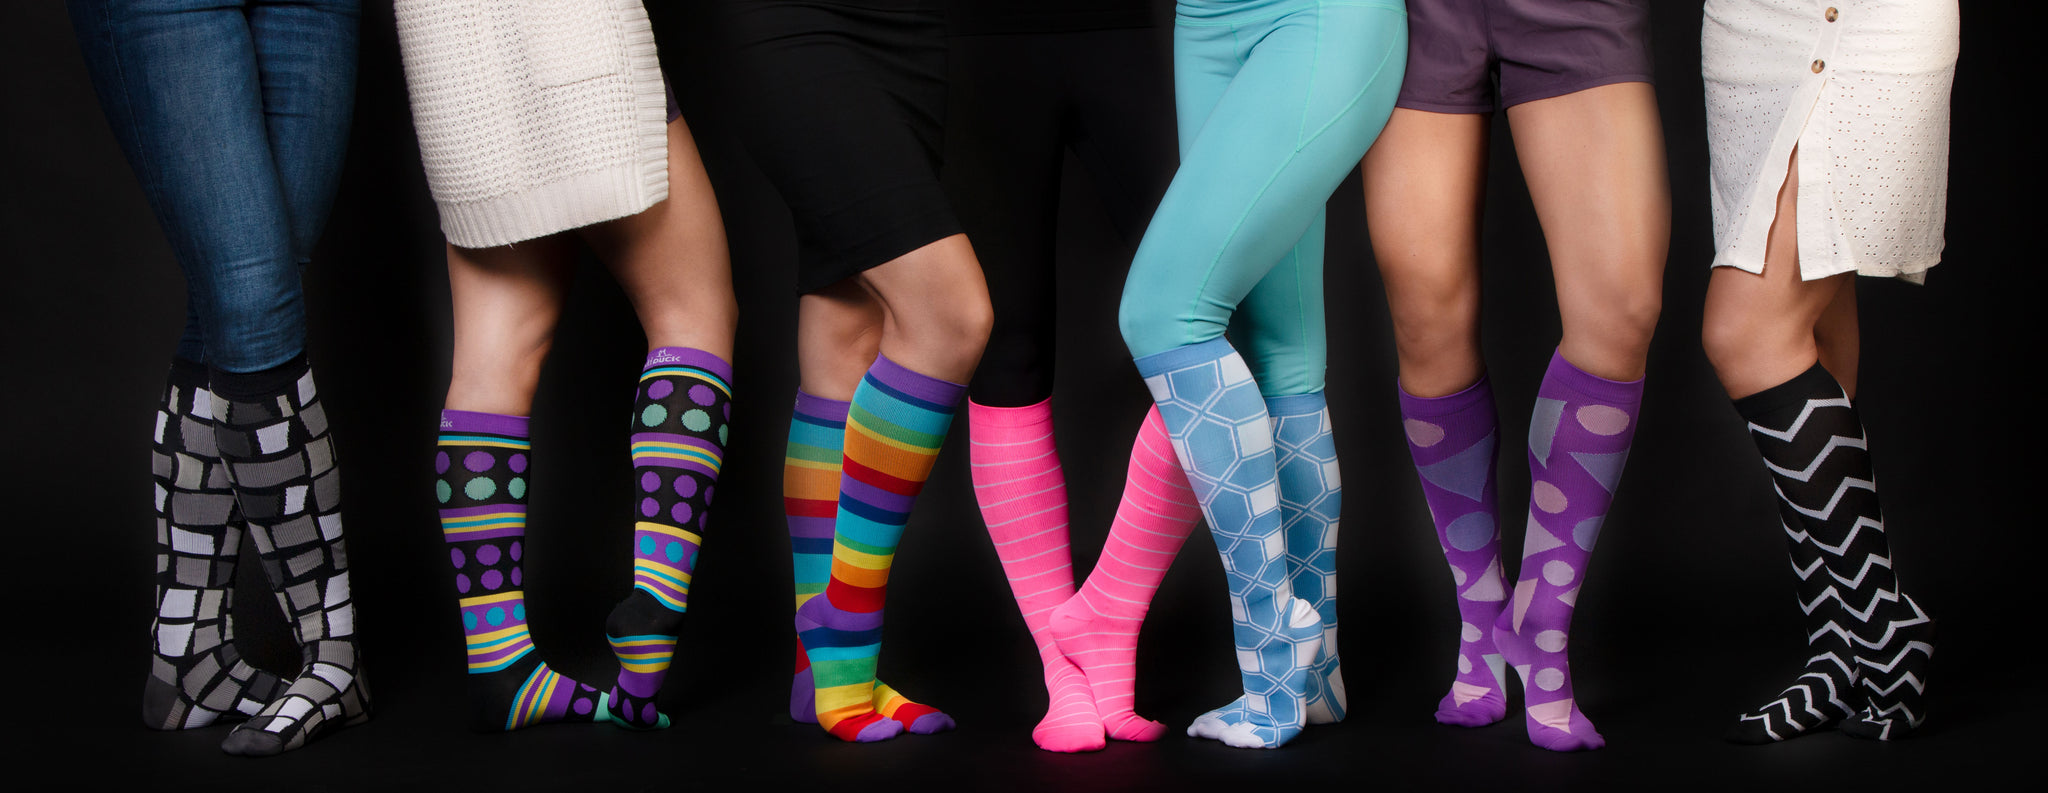 Why Buy Polka Dot Compression Socks in Canada?